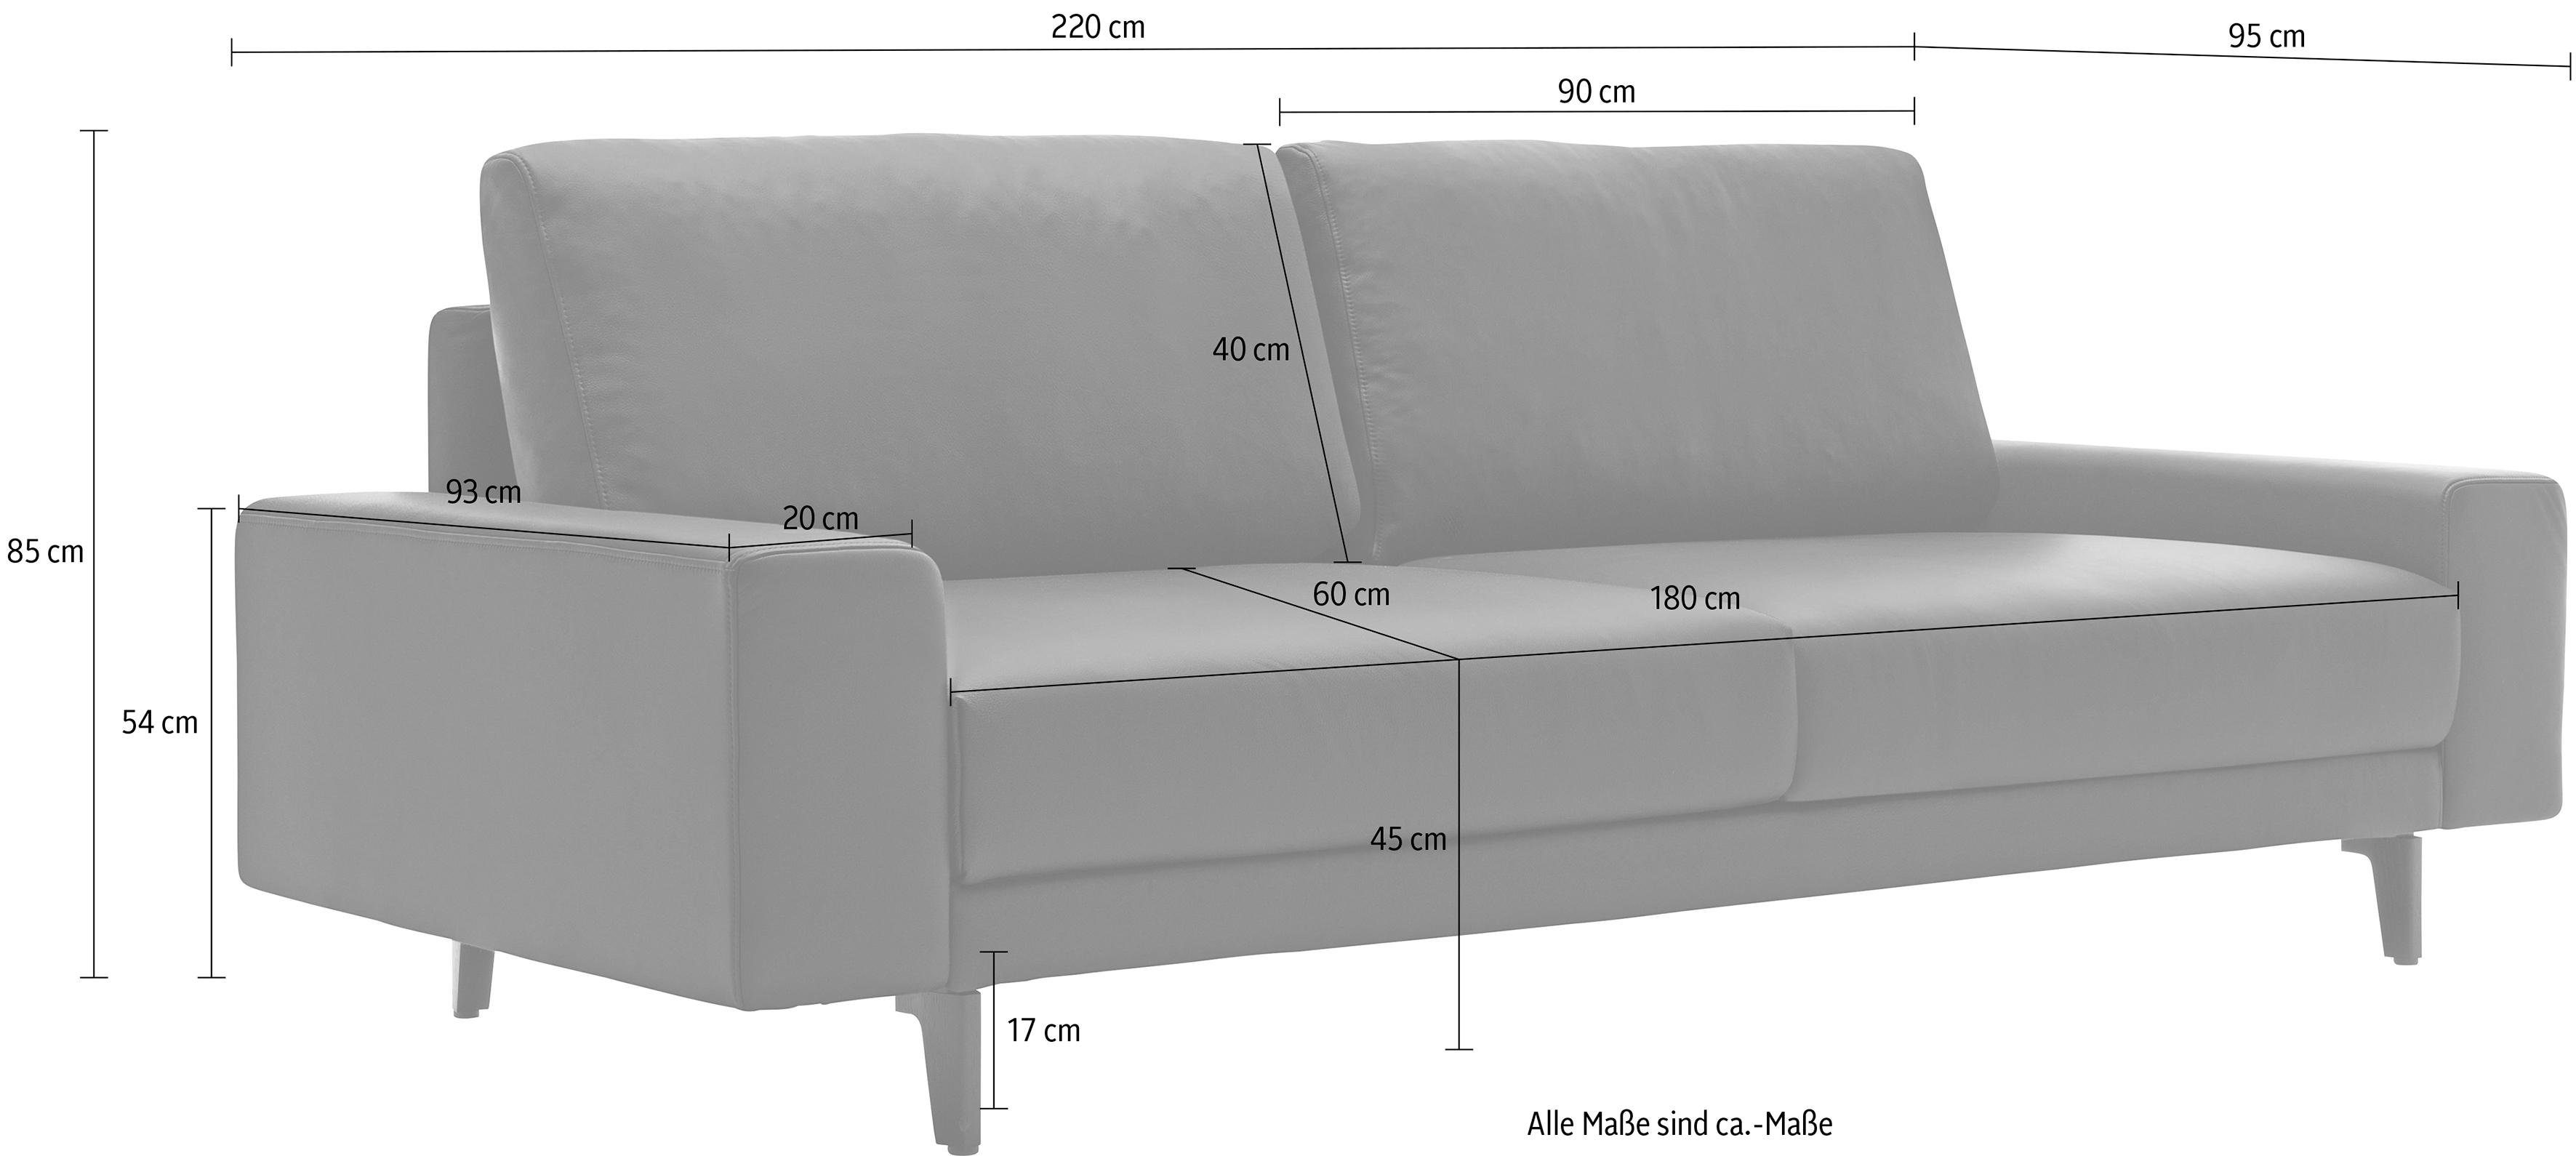 umbragrau, breit sofa hs.450, hülsta niedrig, Alugussfüße 220 Breite Armlehne in 3-Sitzer cm